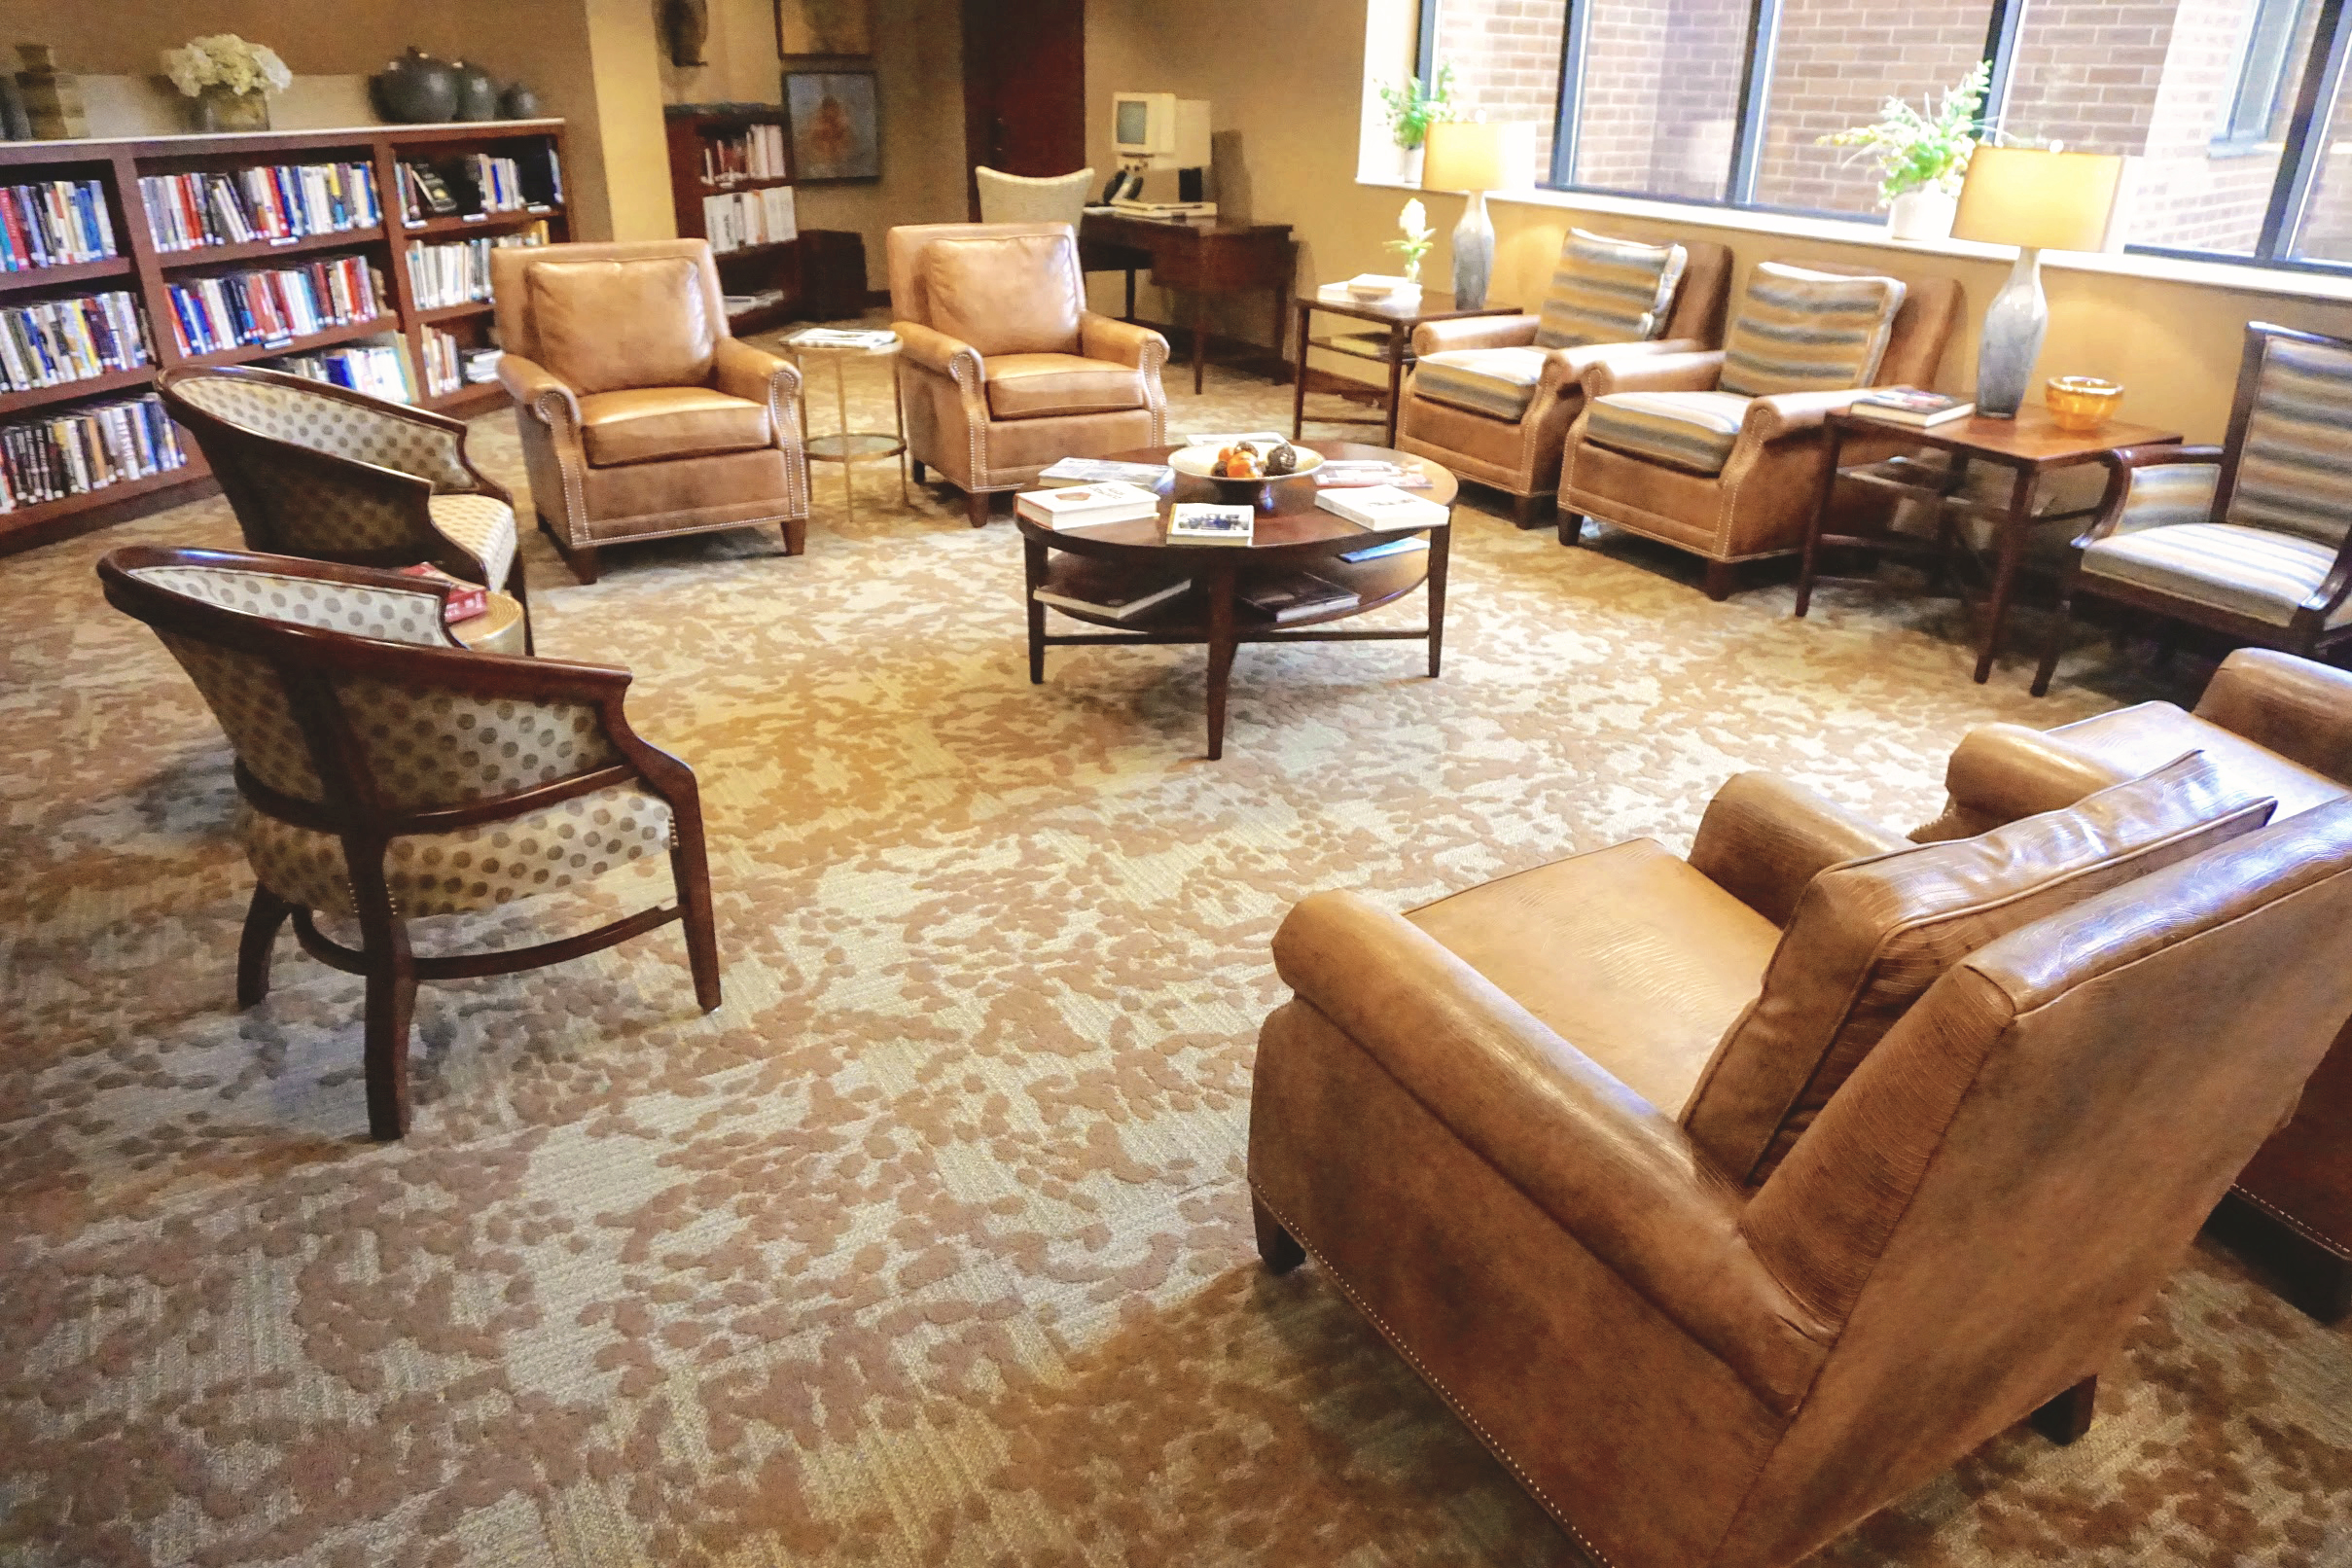 Murrysville flooring and carpets